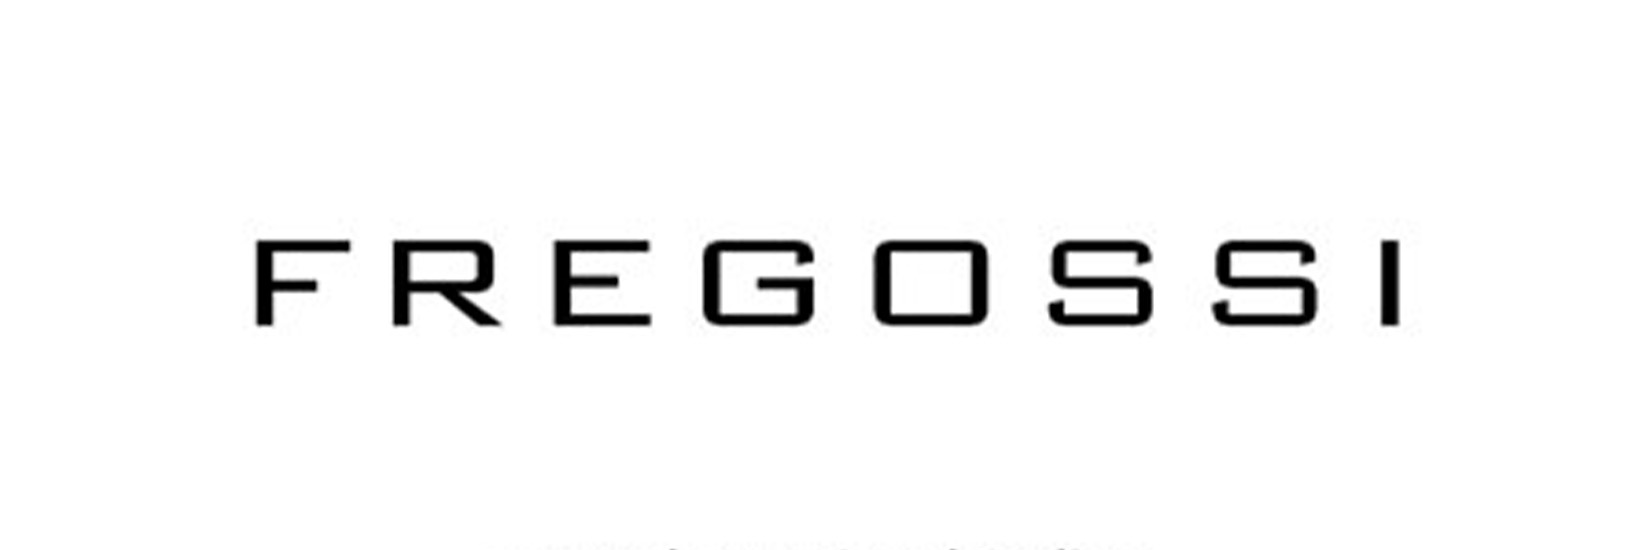 Fregossi logo image